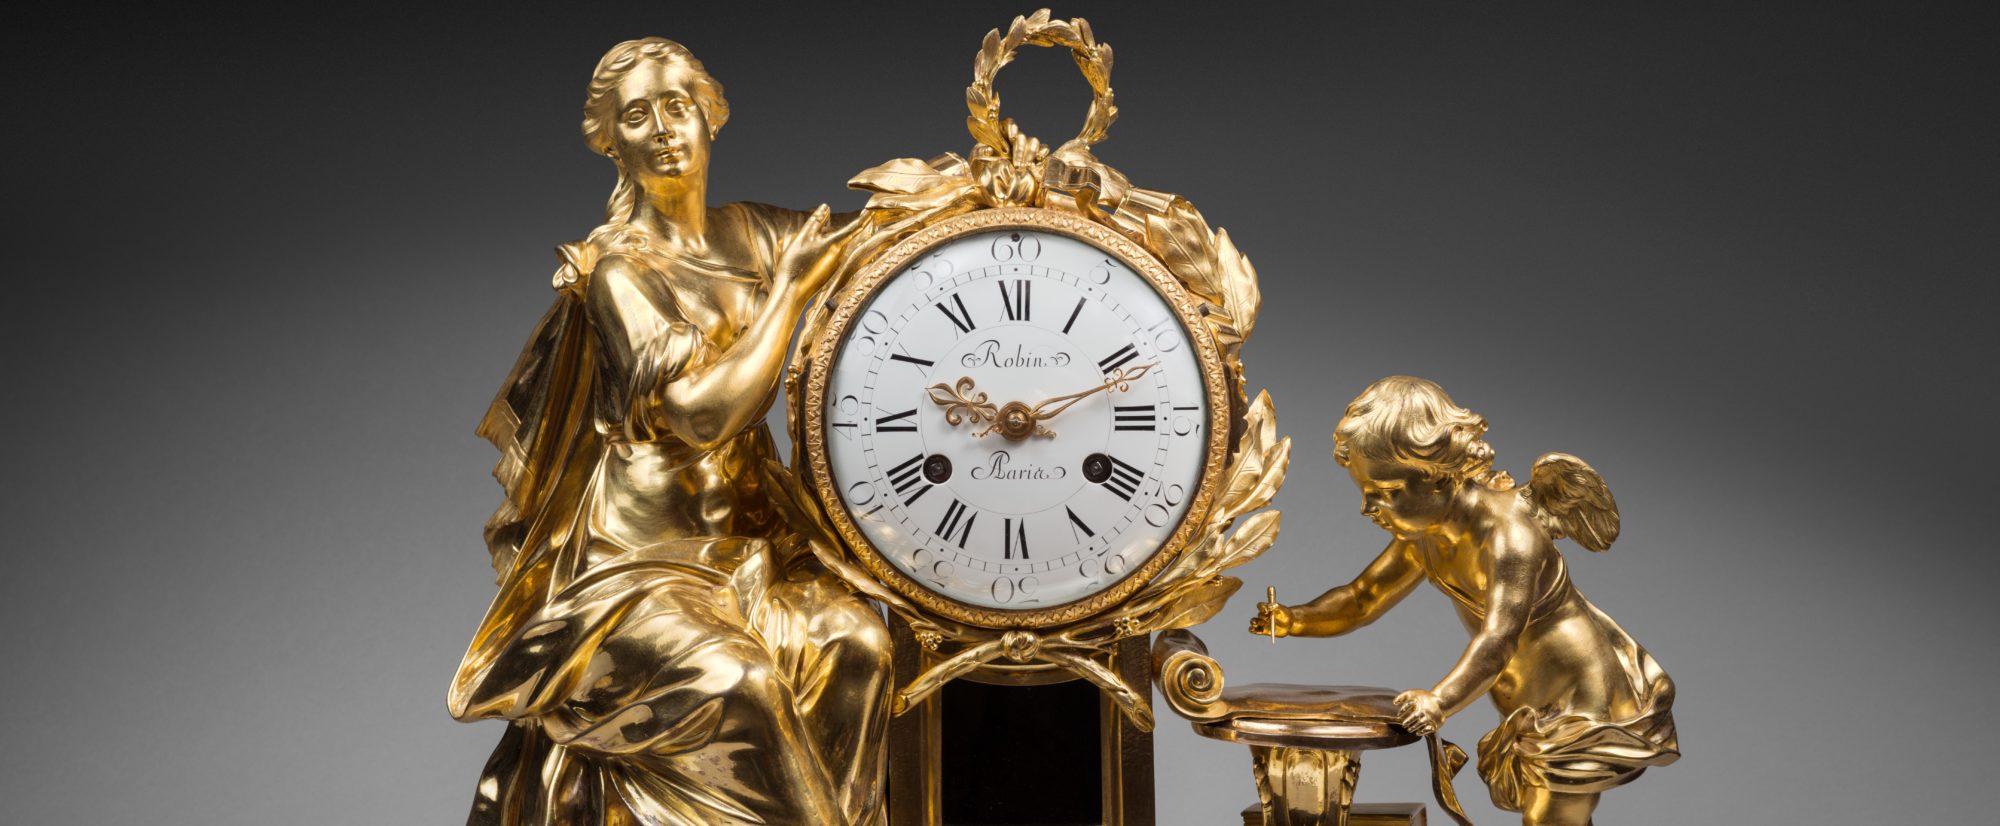 Antique mantel clocks for sale - La Pendulerie Paris Antique Clocks and Antique Art